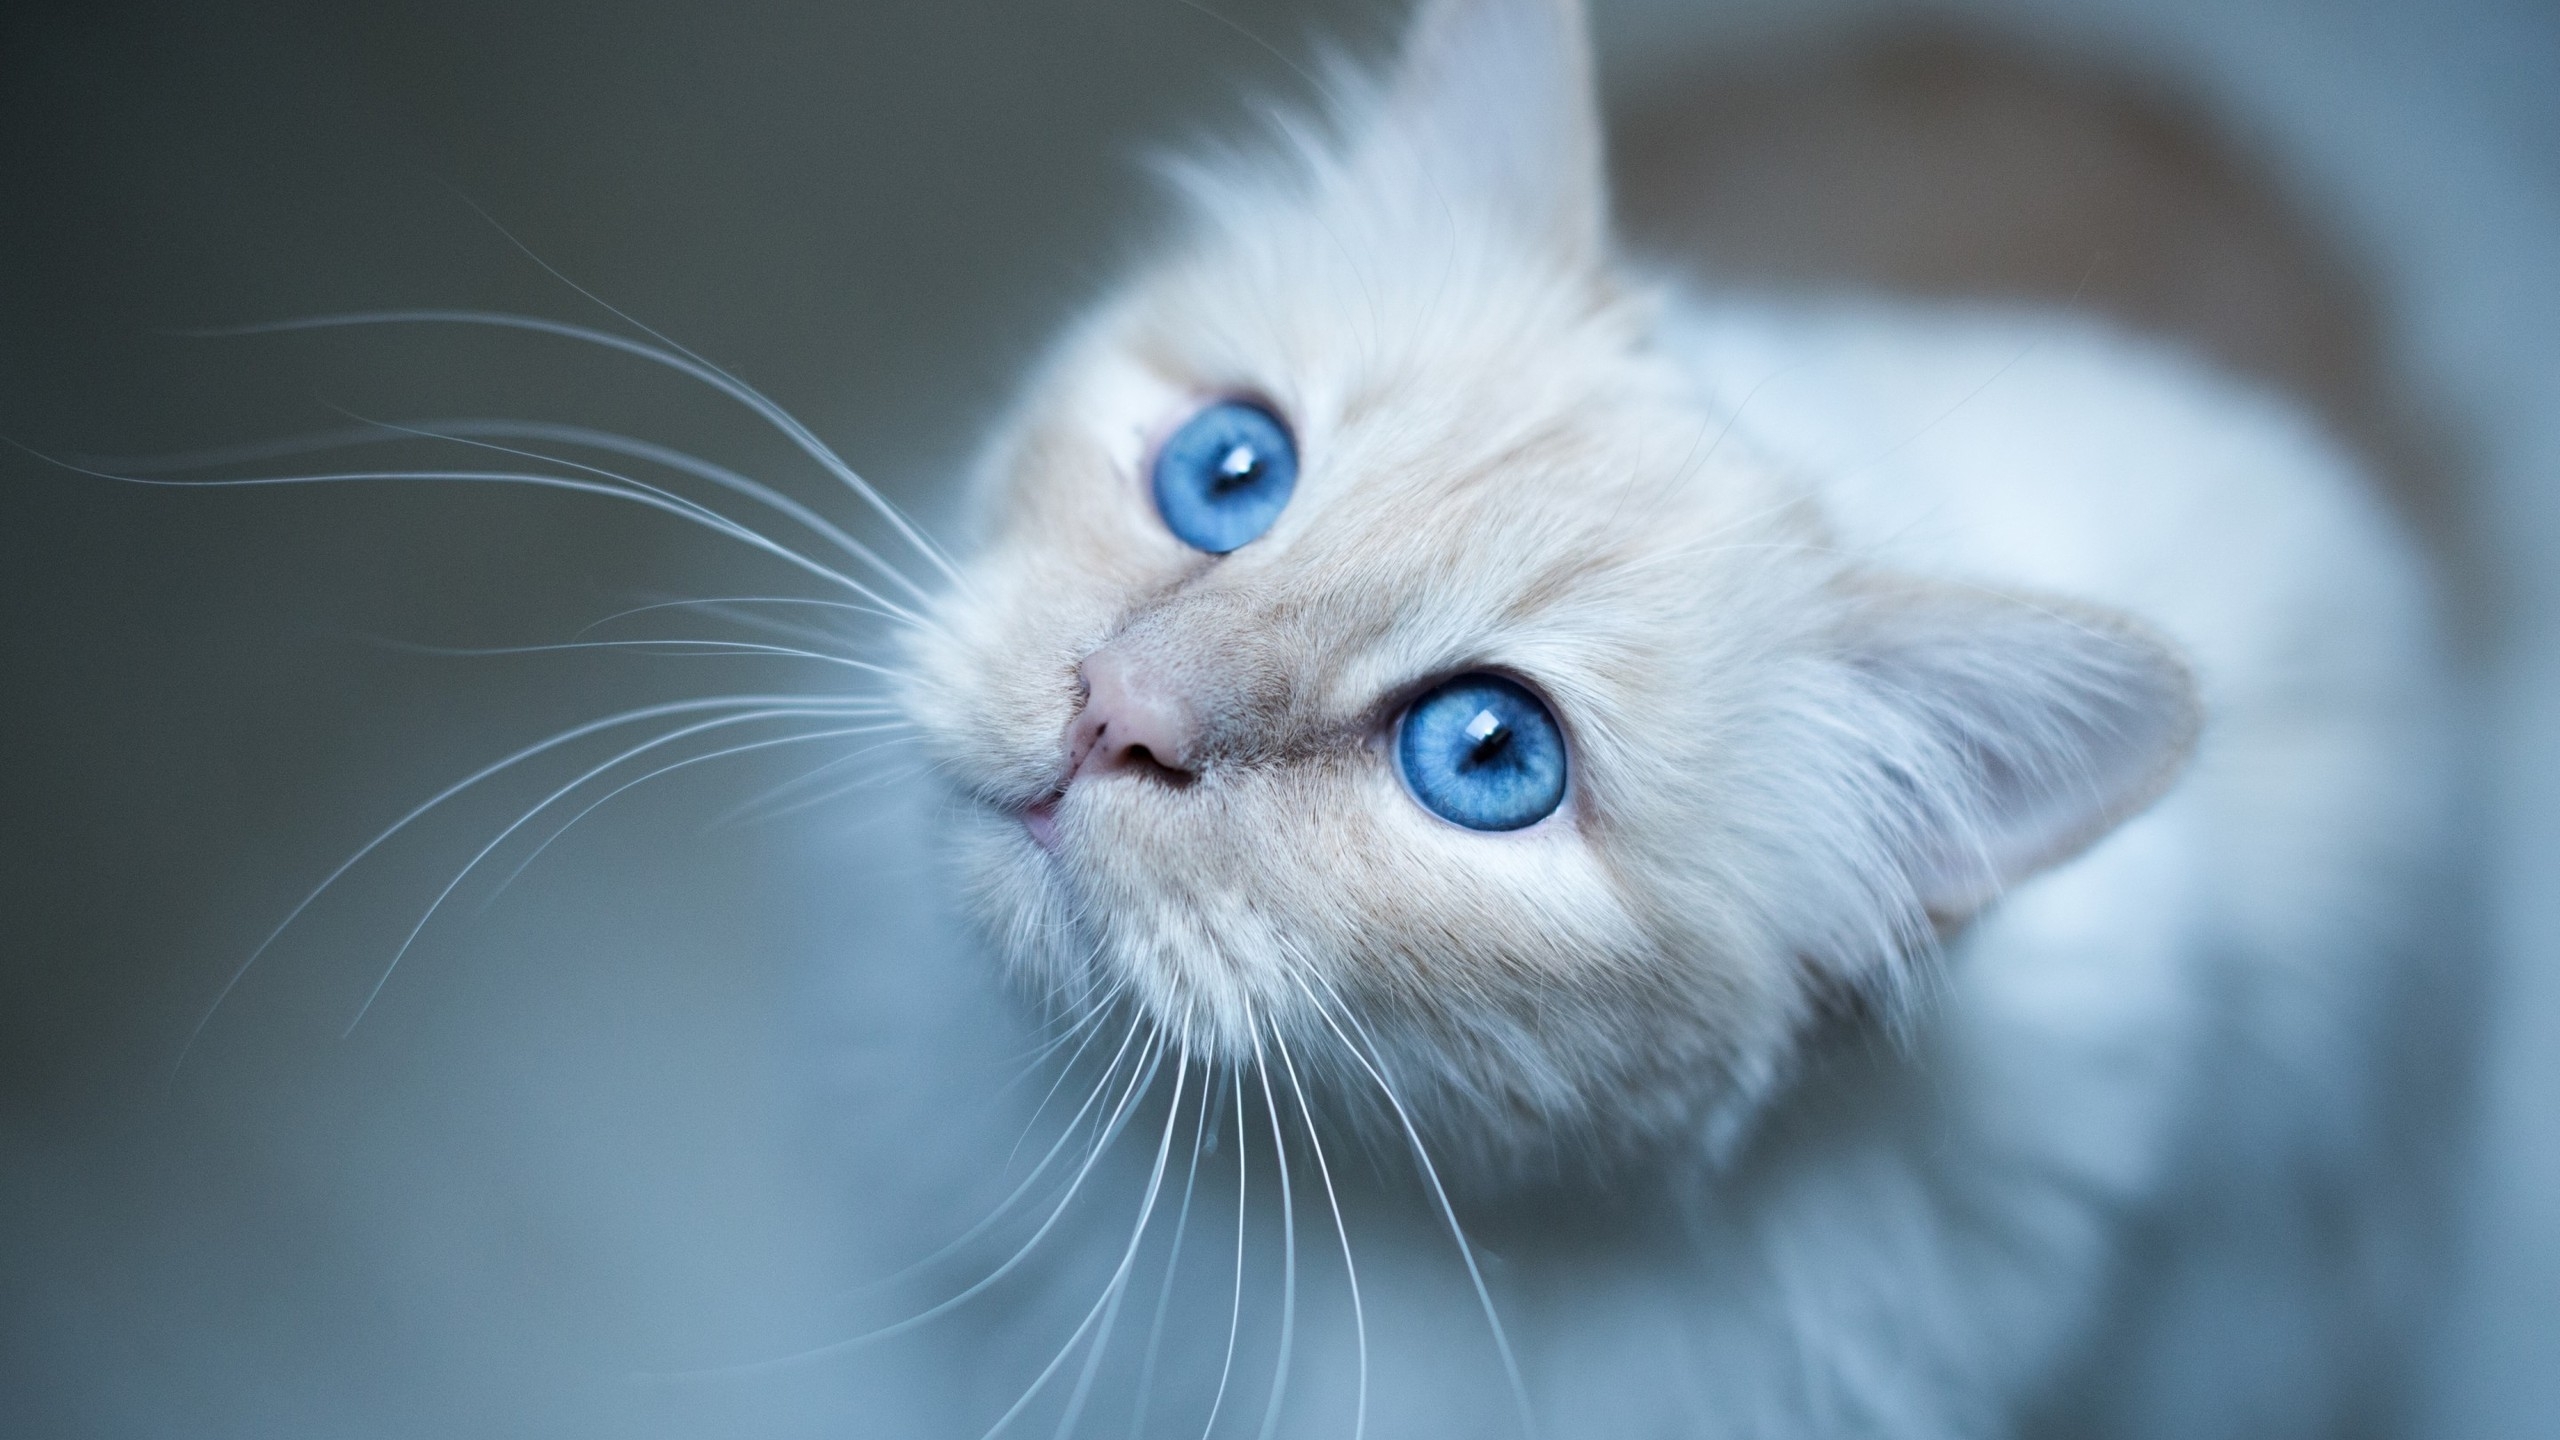 Kitty Blue Eyes for 2560x1440 HDTV resolution